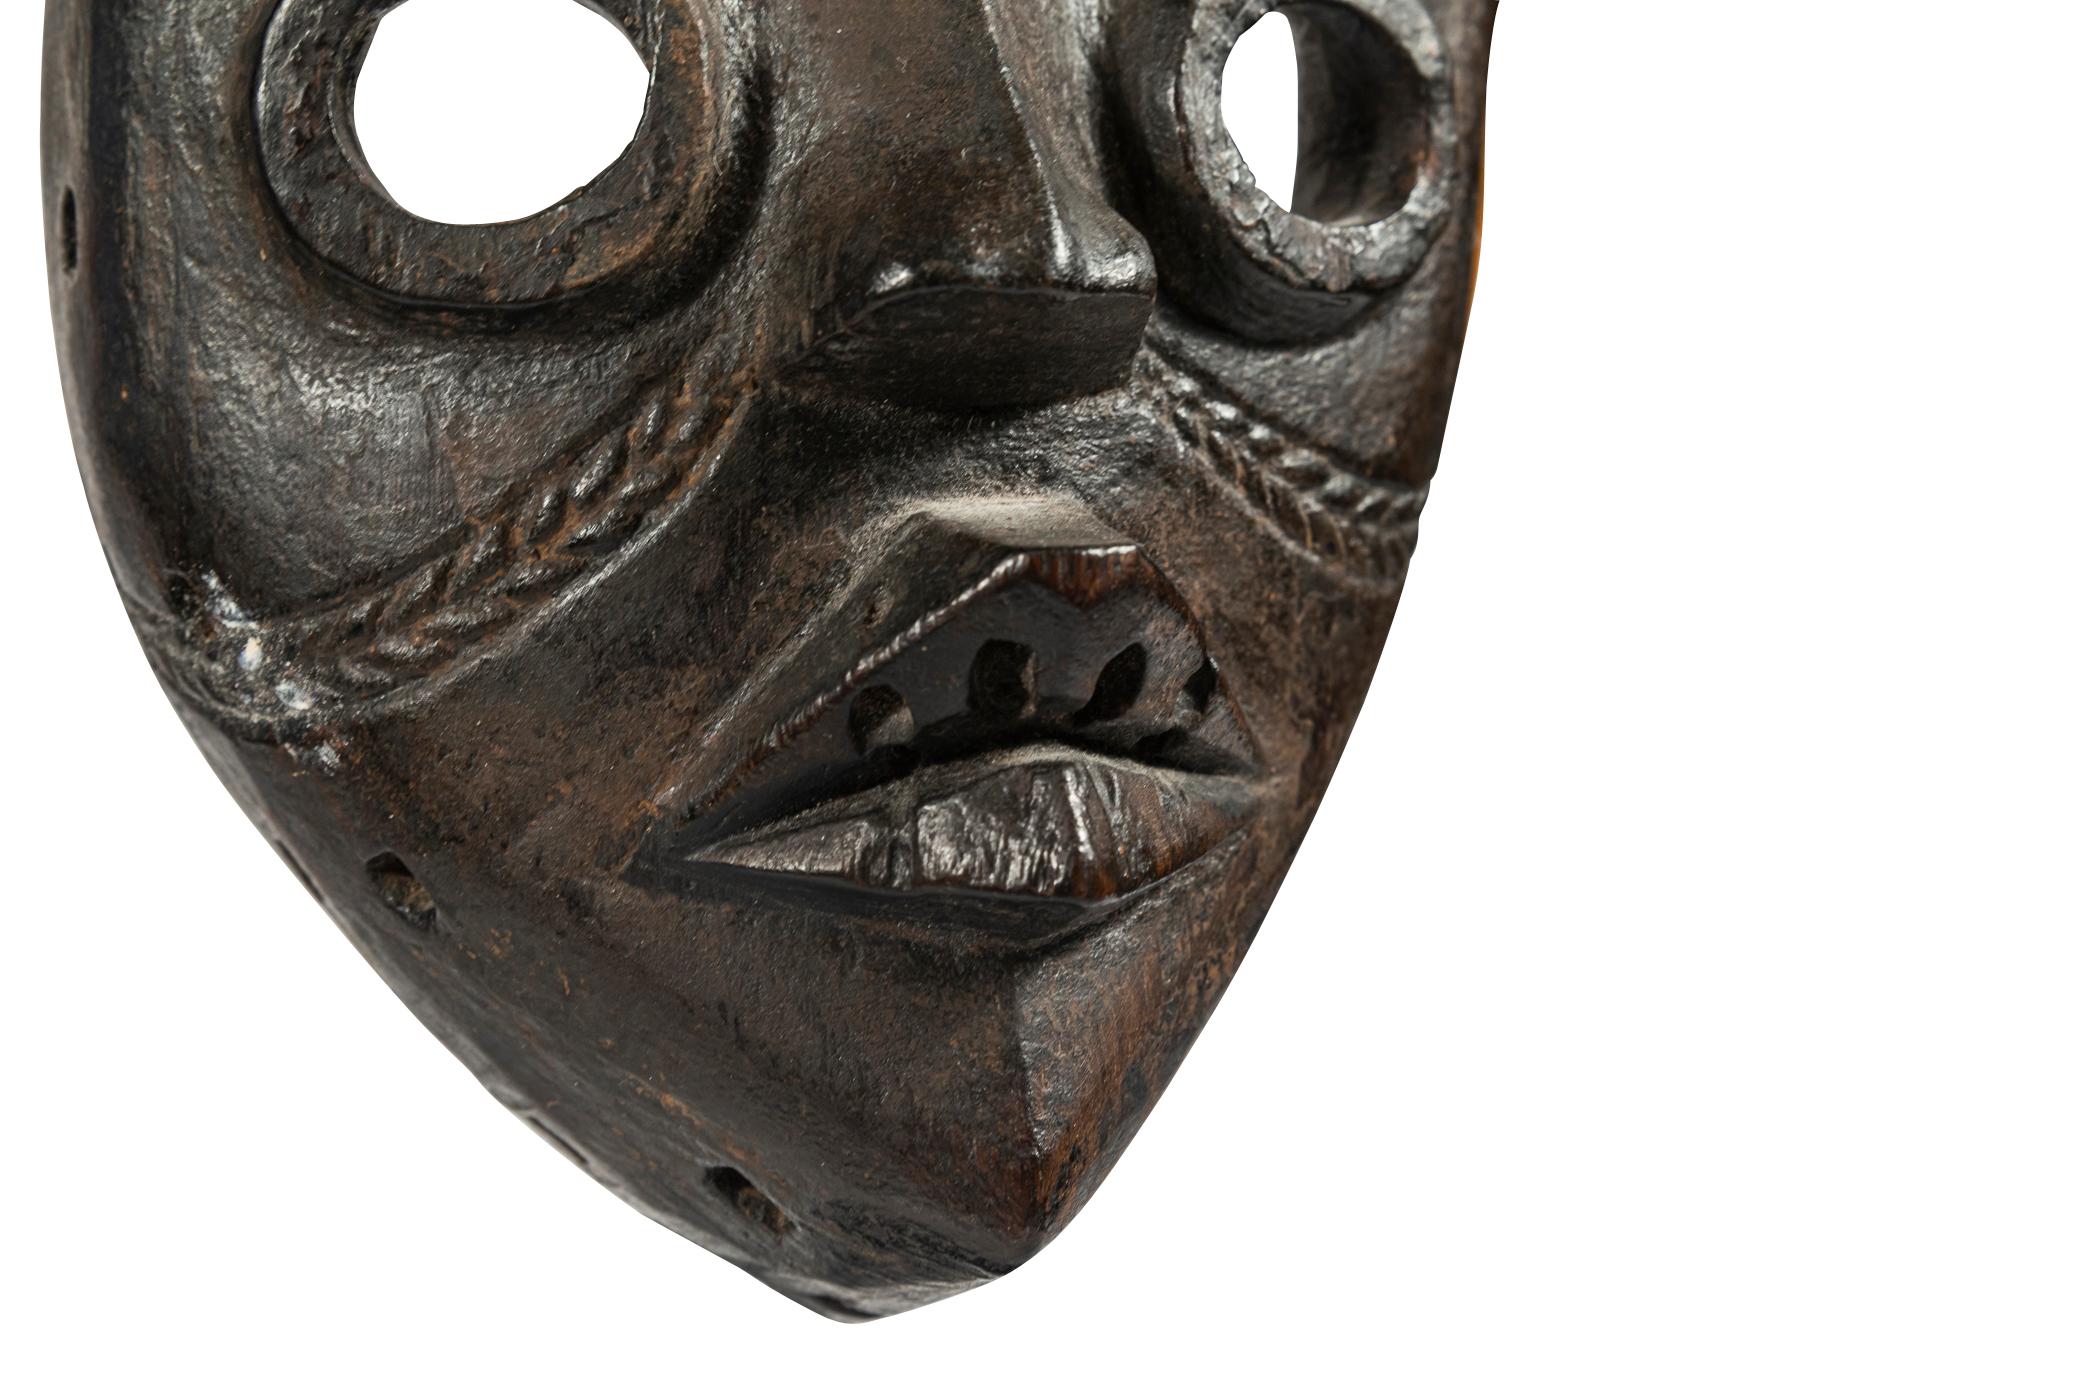 20th Century Dan-Toure, Face Mask, Ivory Coast, Late 19th Century